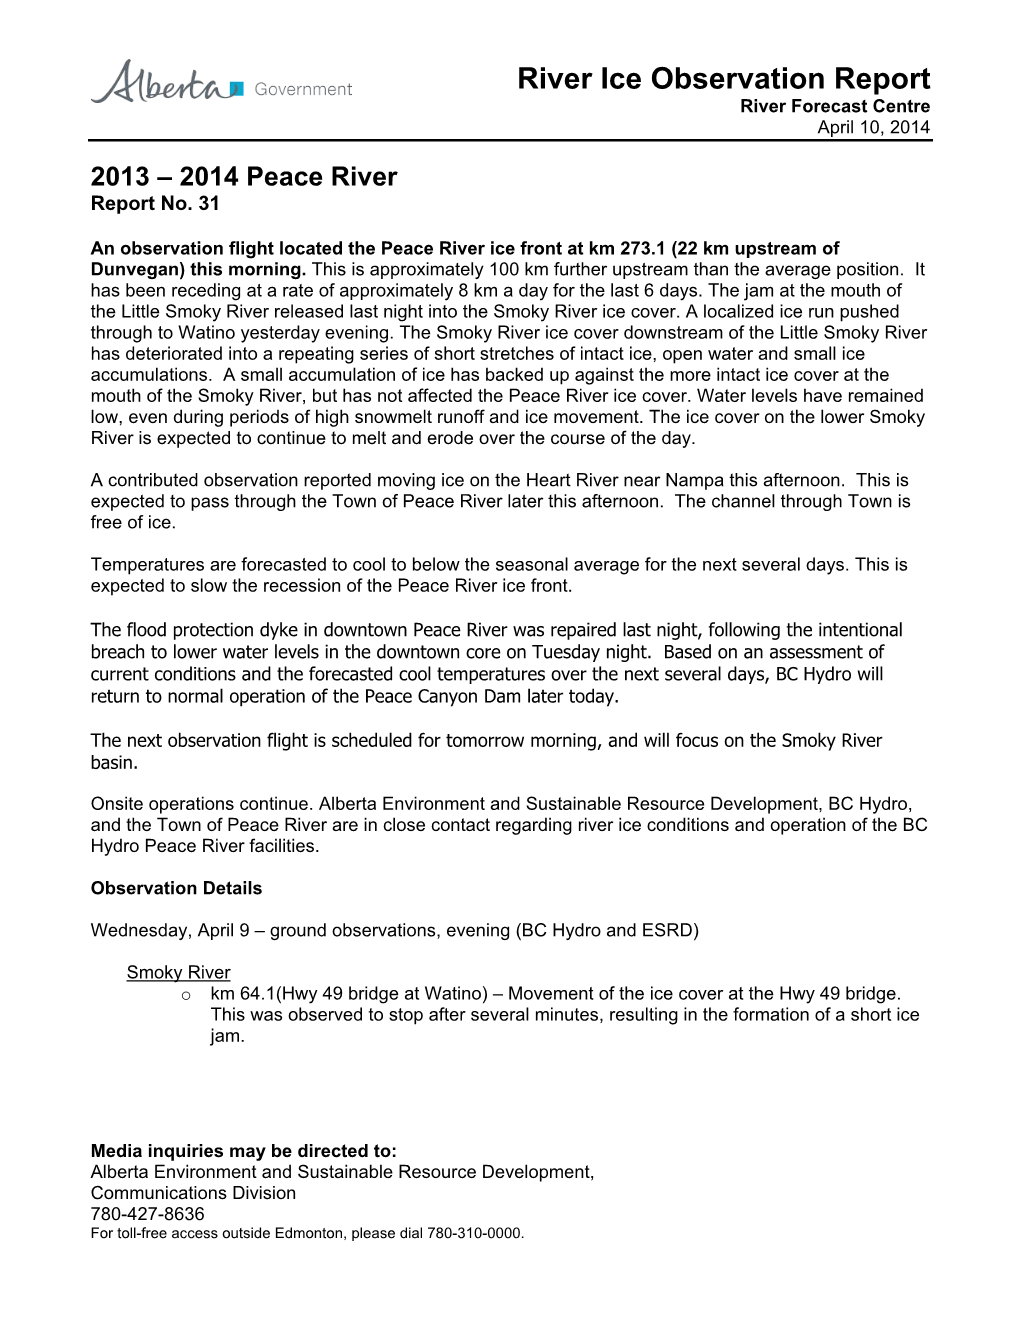 River Ice Observation Report River Forecast Centre April 10, 2014